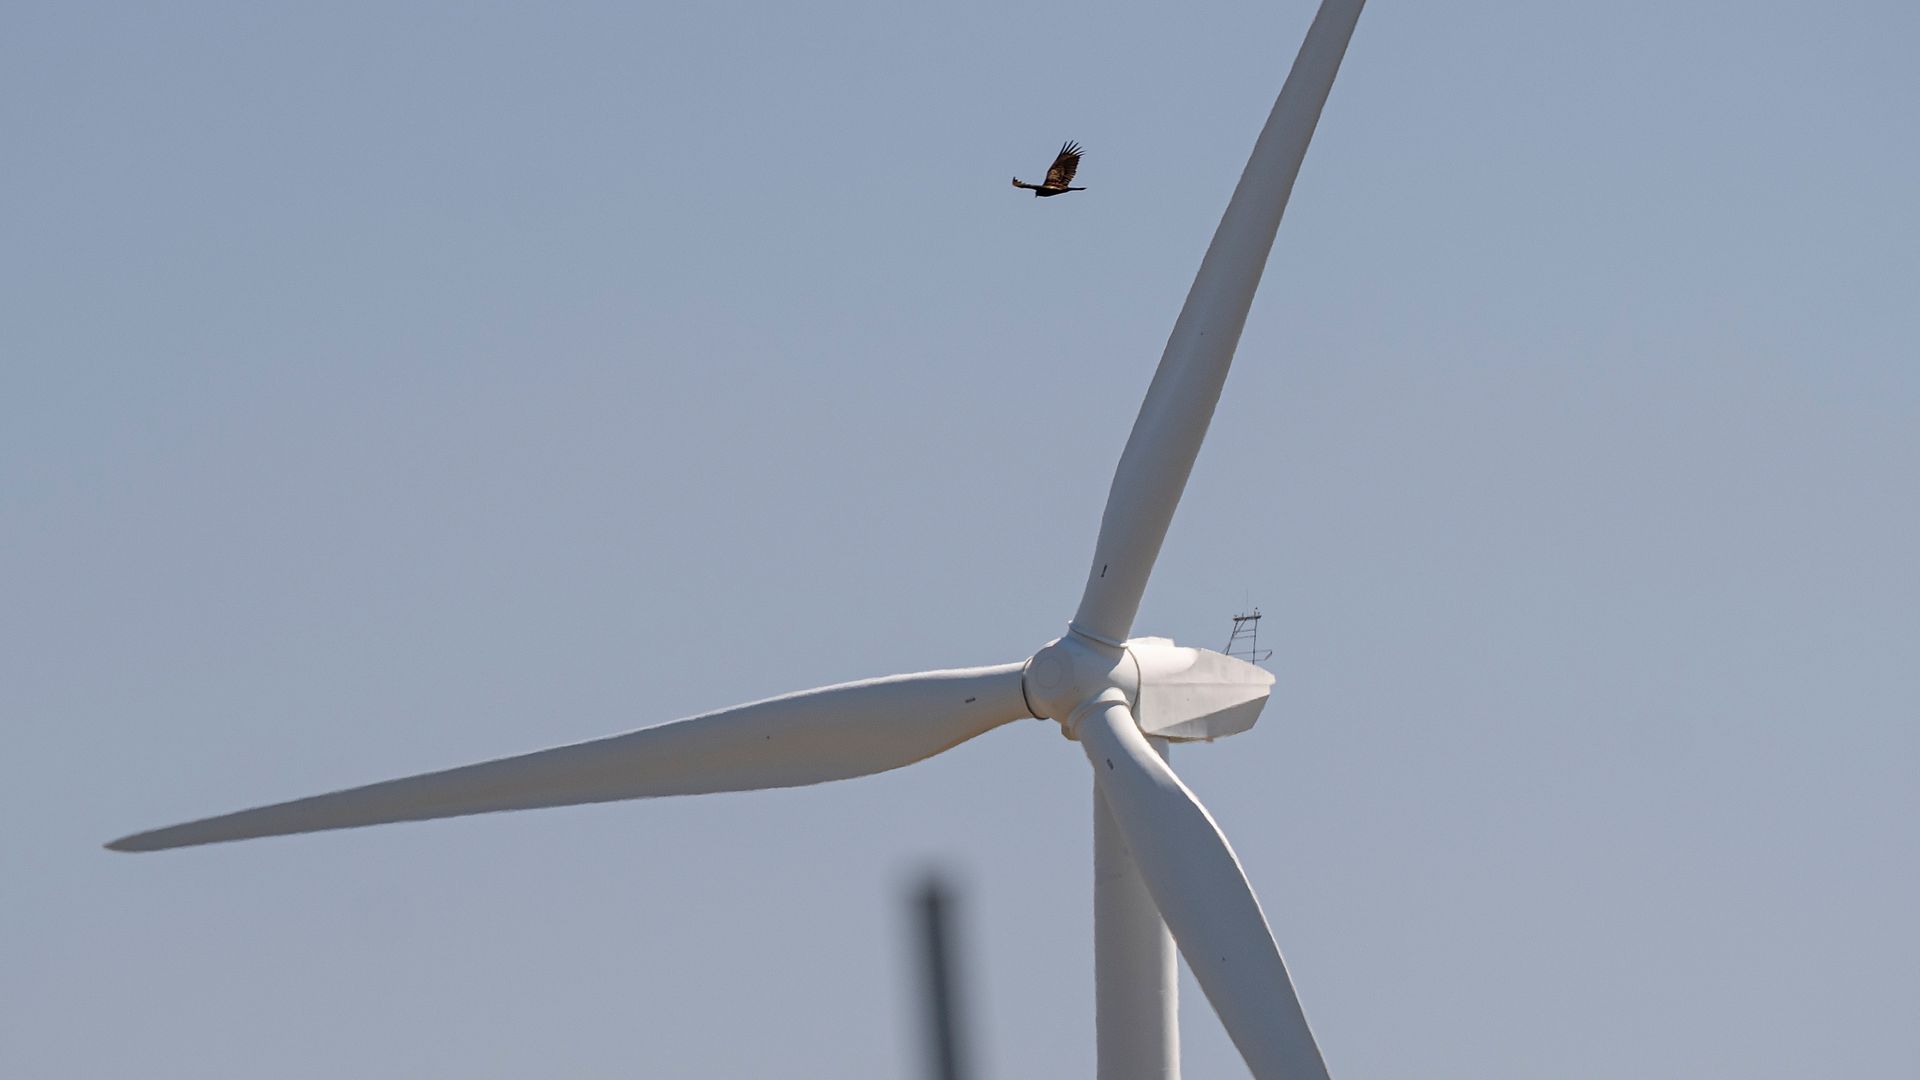 A bird flies over a wind turbine at a wind farm near Highway 12 in Rio Vista, California, U.S., on Tuesday, March 30